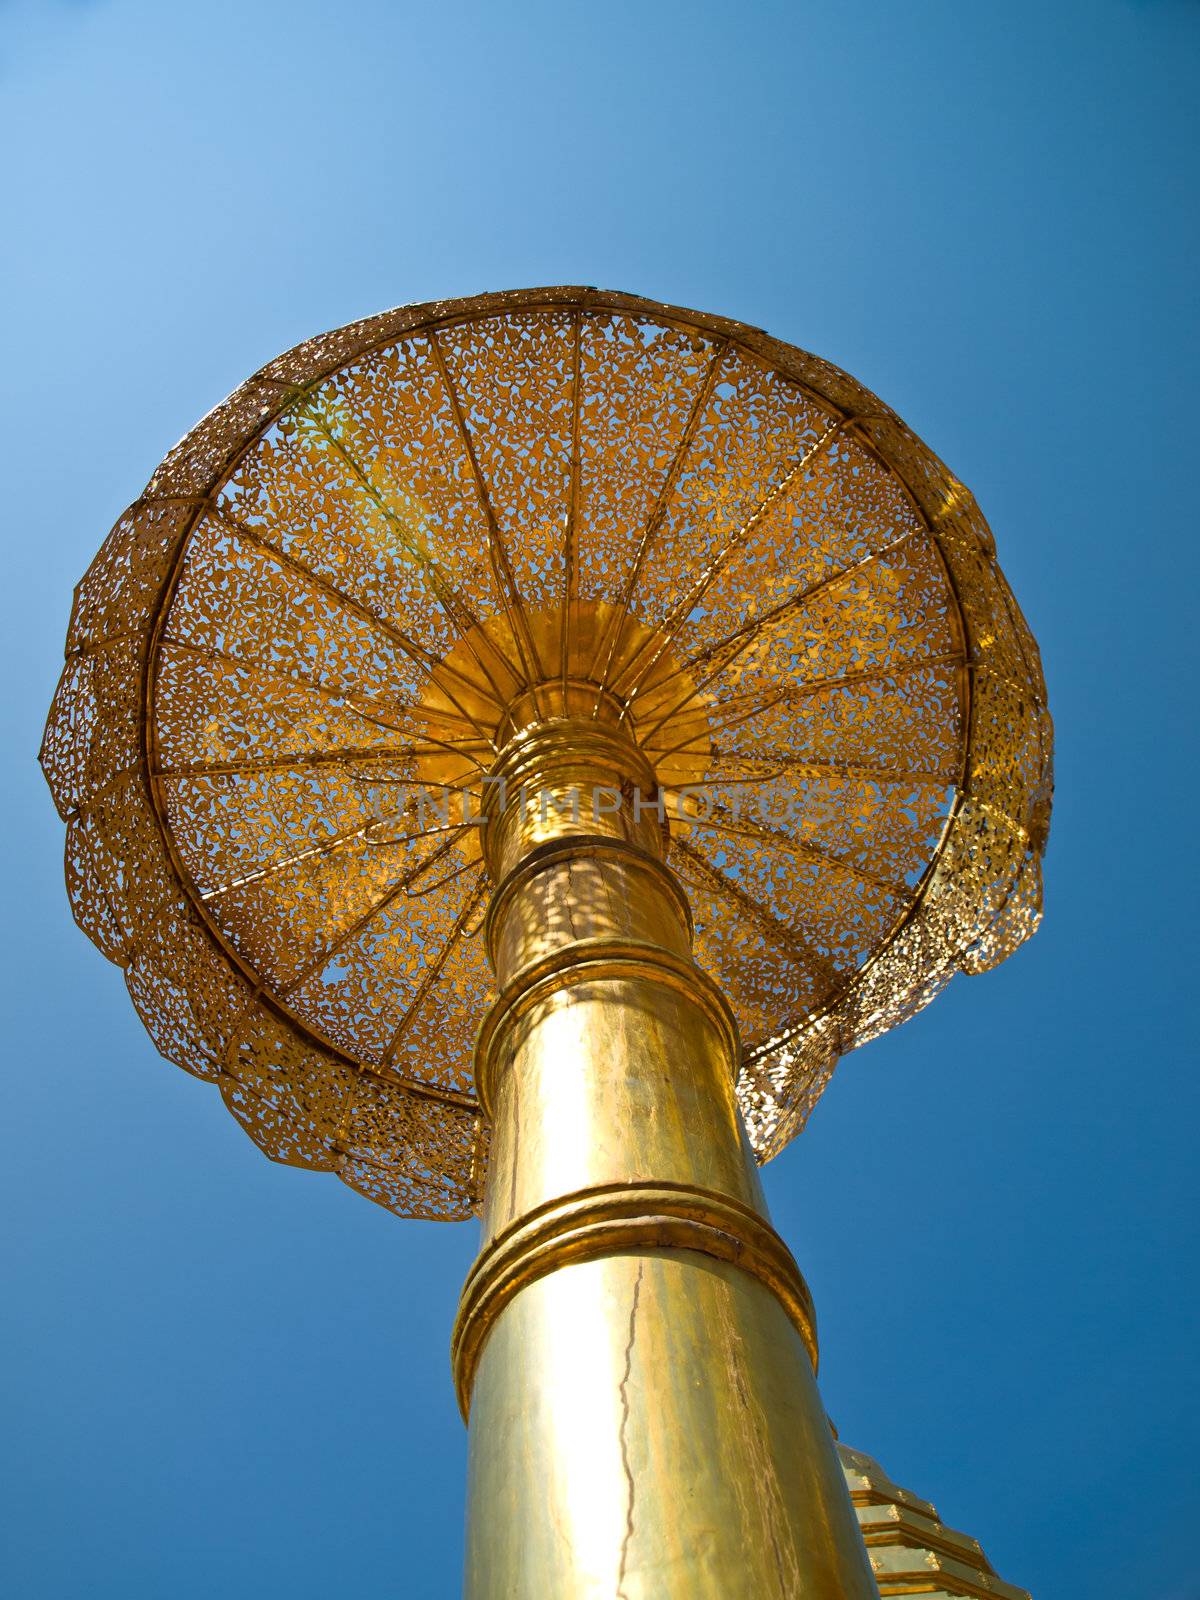 Golden umbrella, Wat Phrathat Doi Suthep temple in Chiang Mai by gururugu